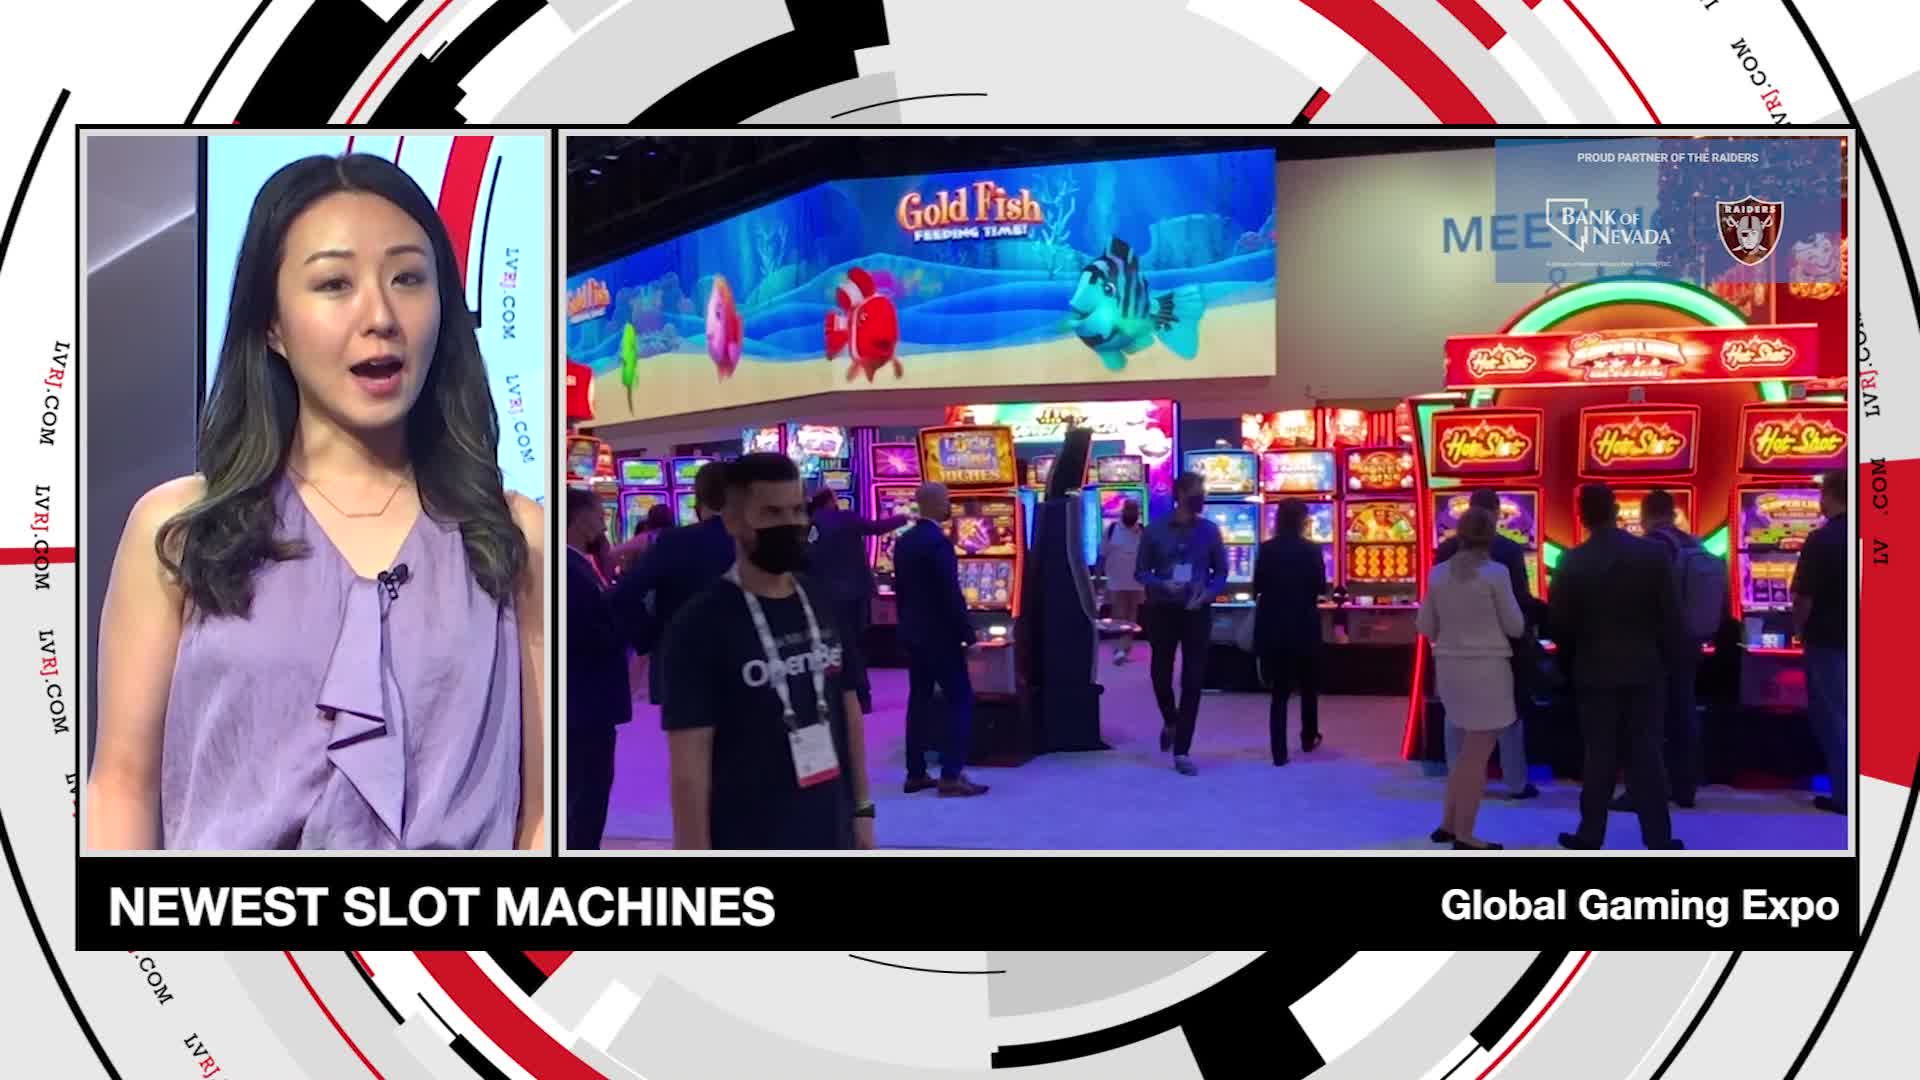 7@7PM Newest Slot Machines at G@E